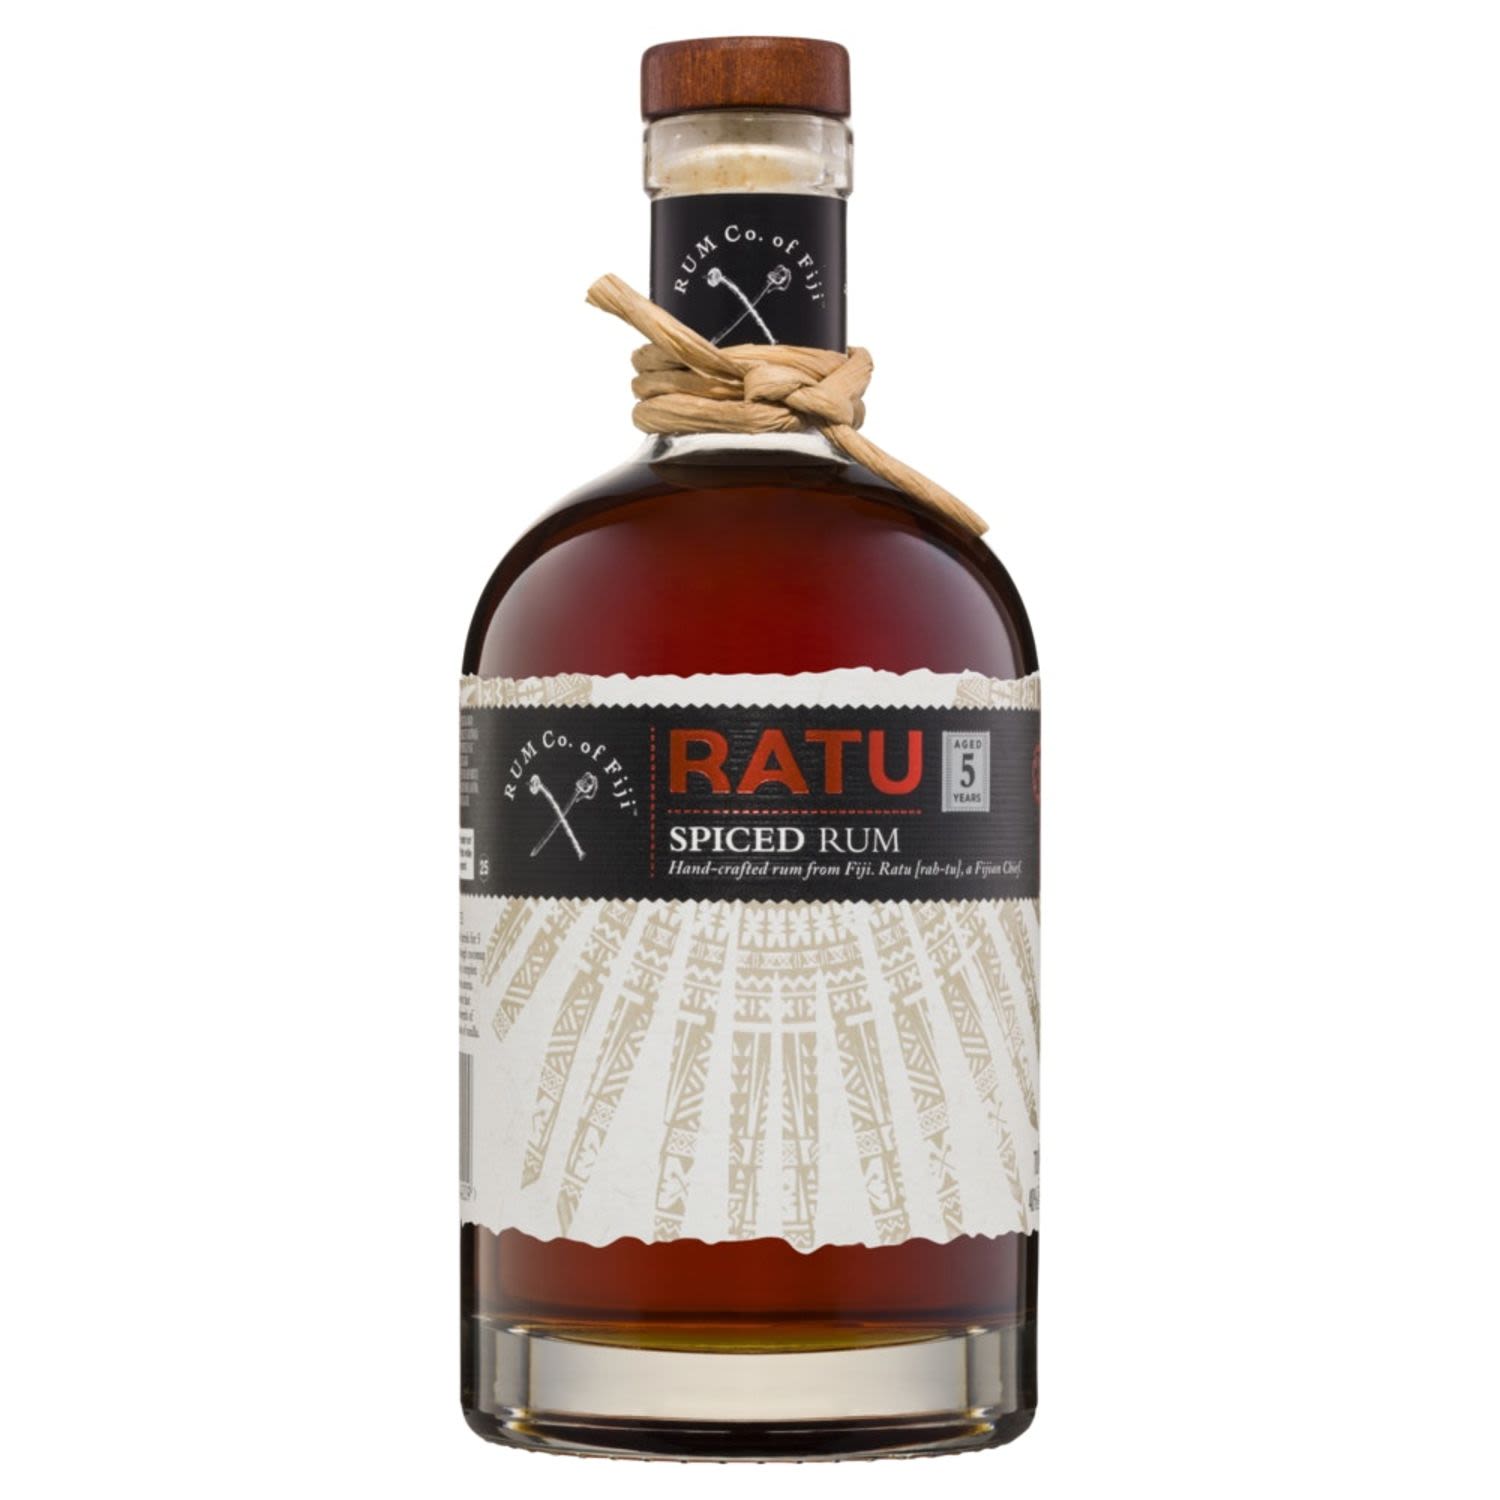 Ratu 5 Year Old Spiced Rum 700mL Bottle